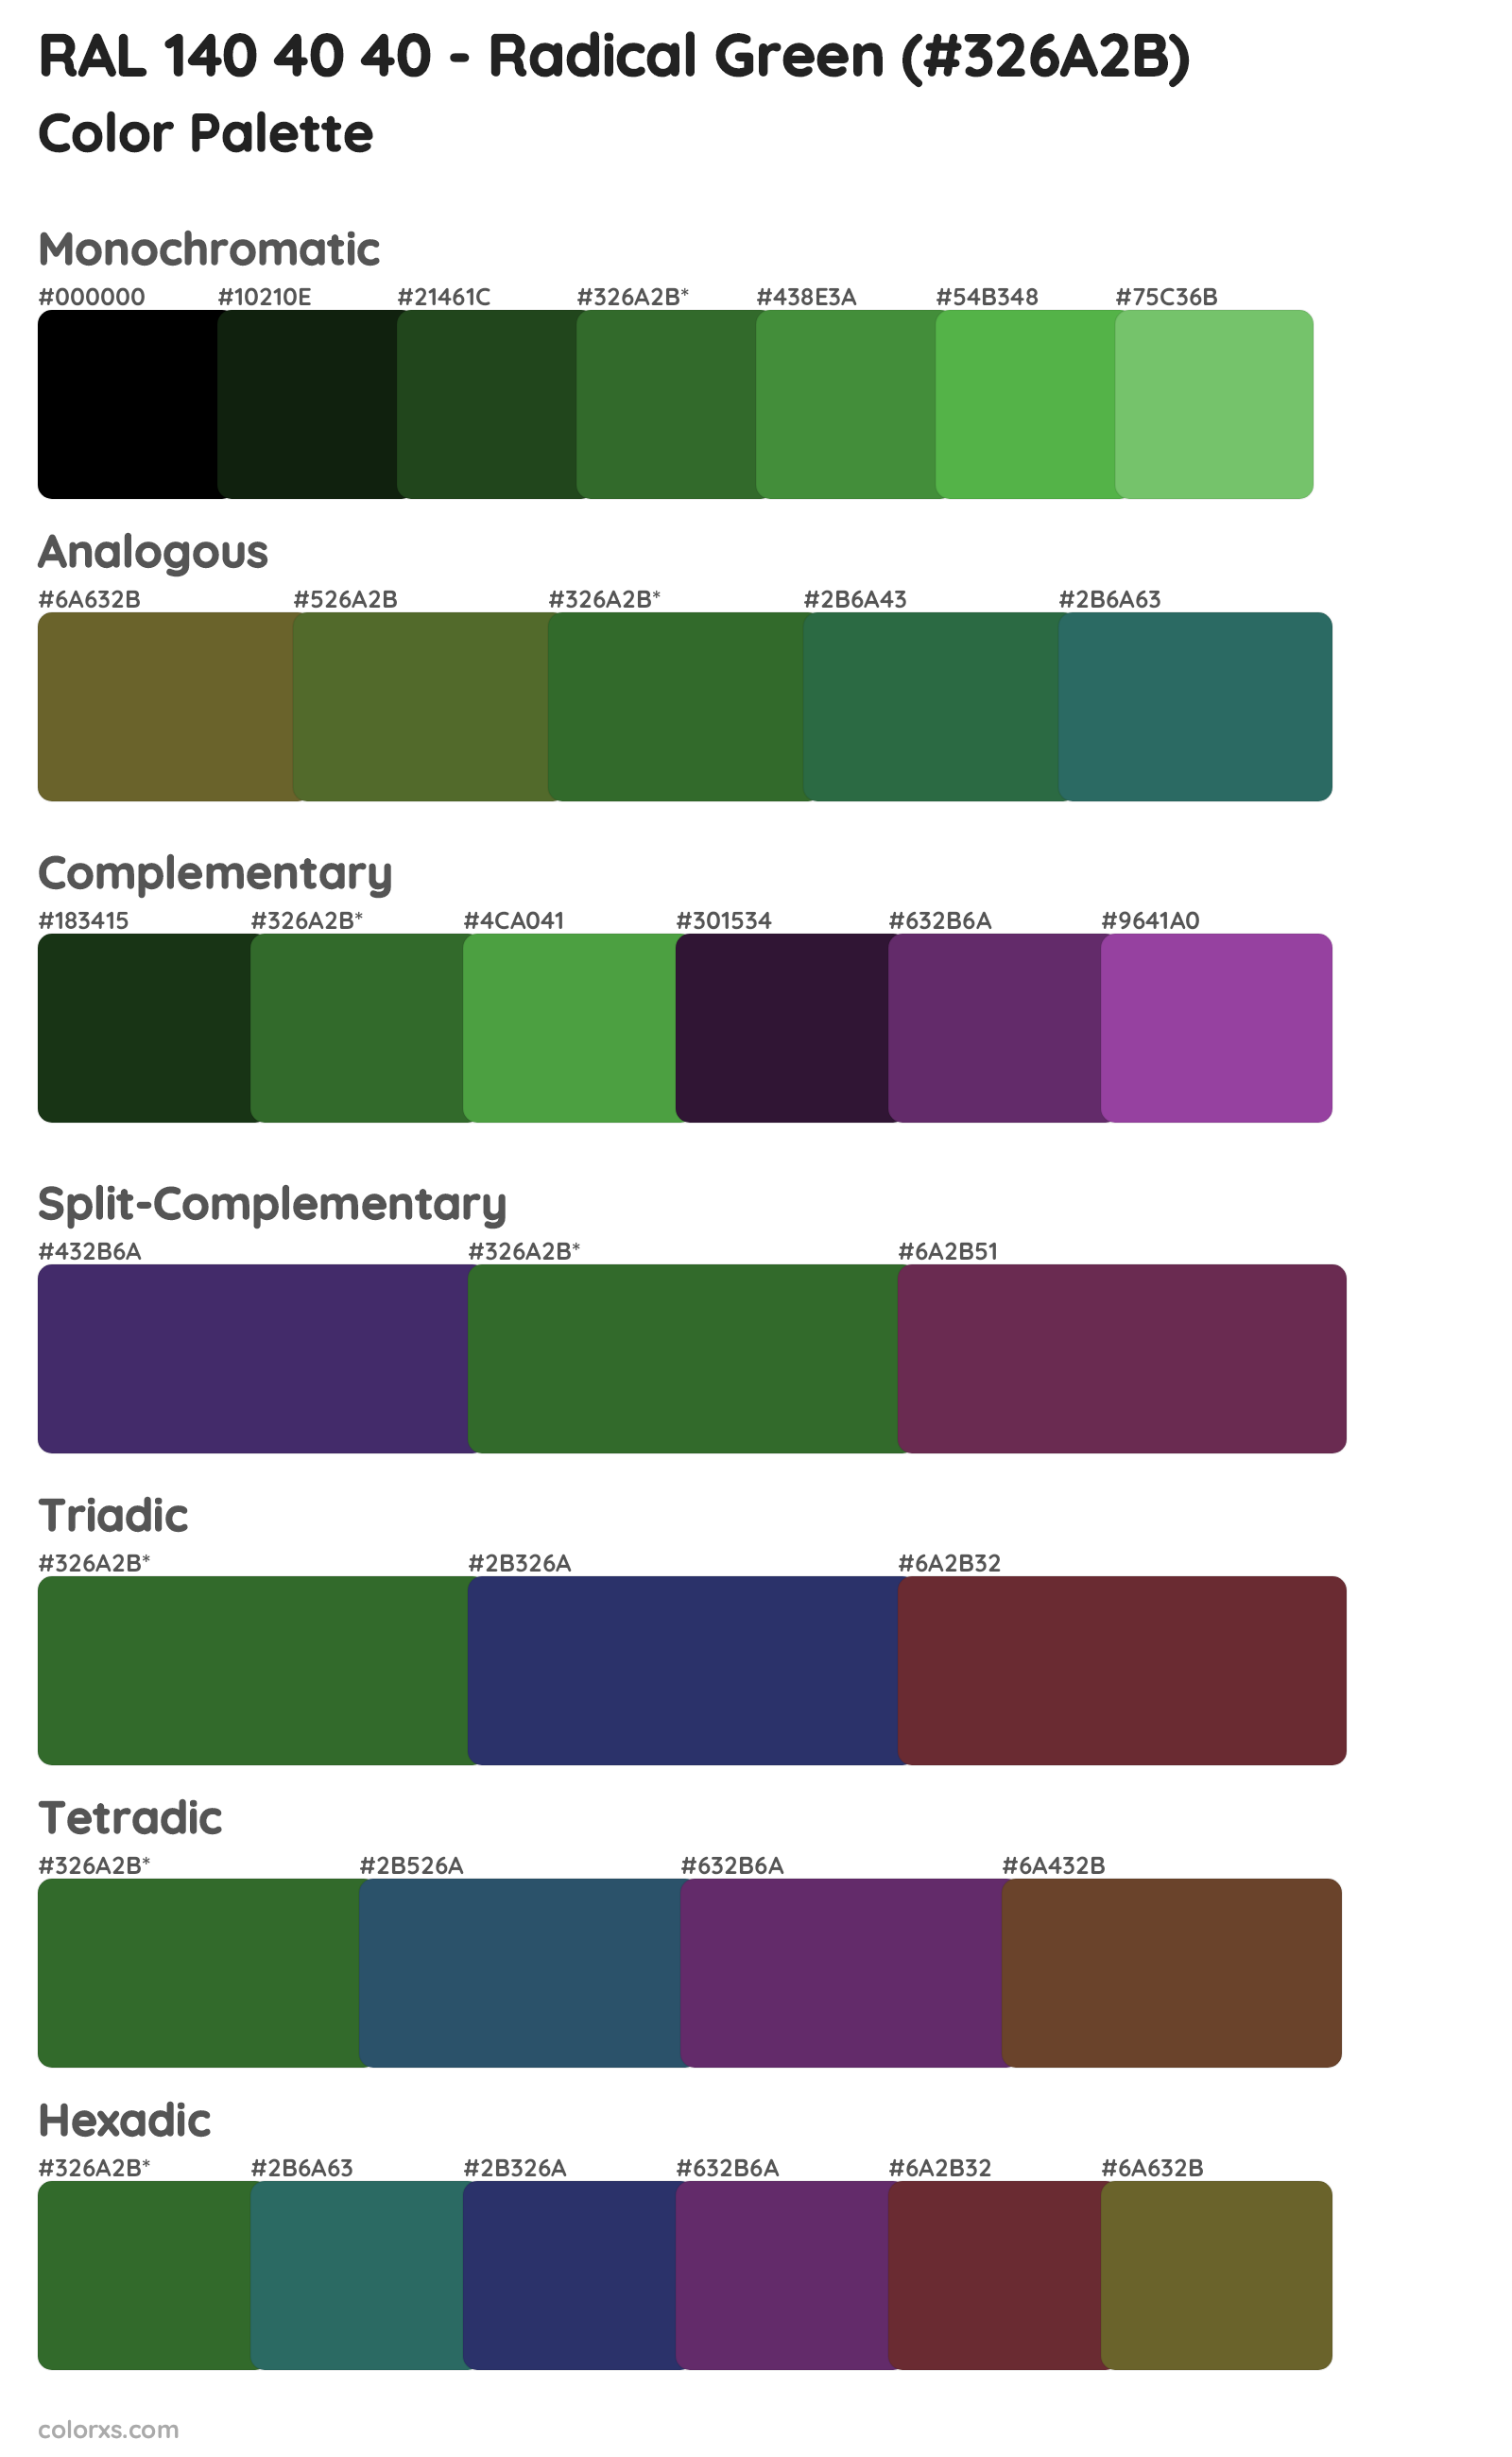 RAL 140 40 40 - Radical Green Color Scheme Palettes